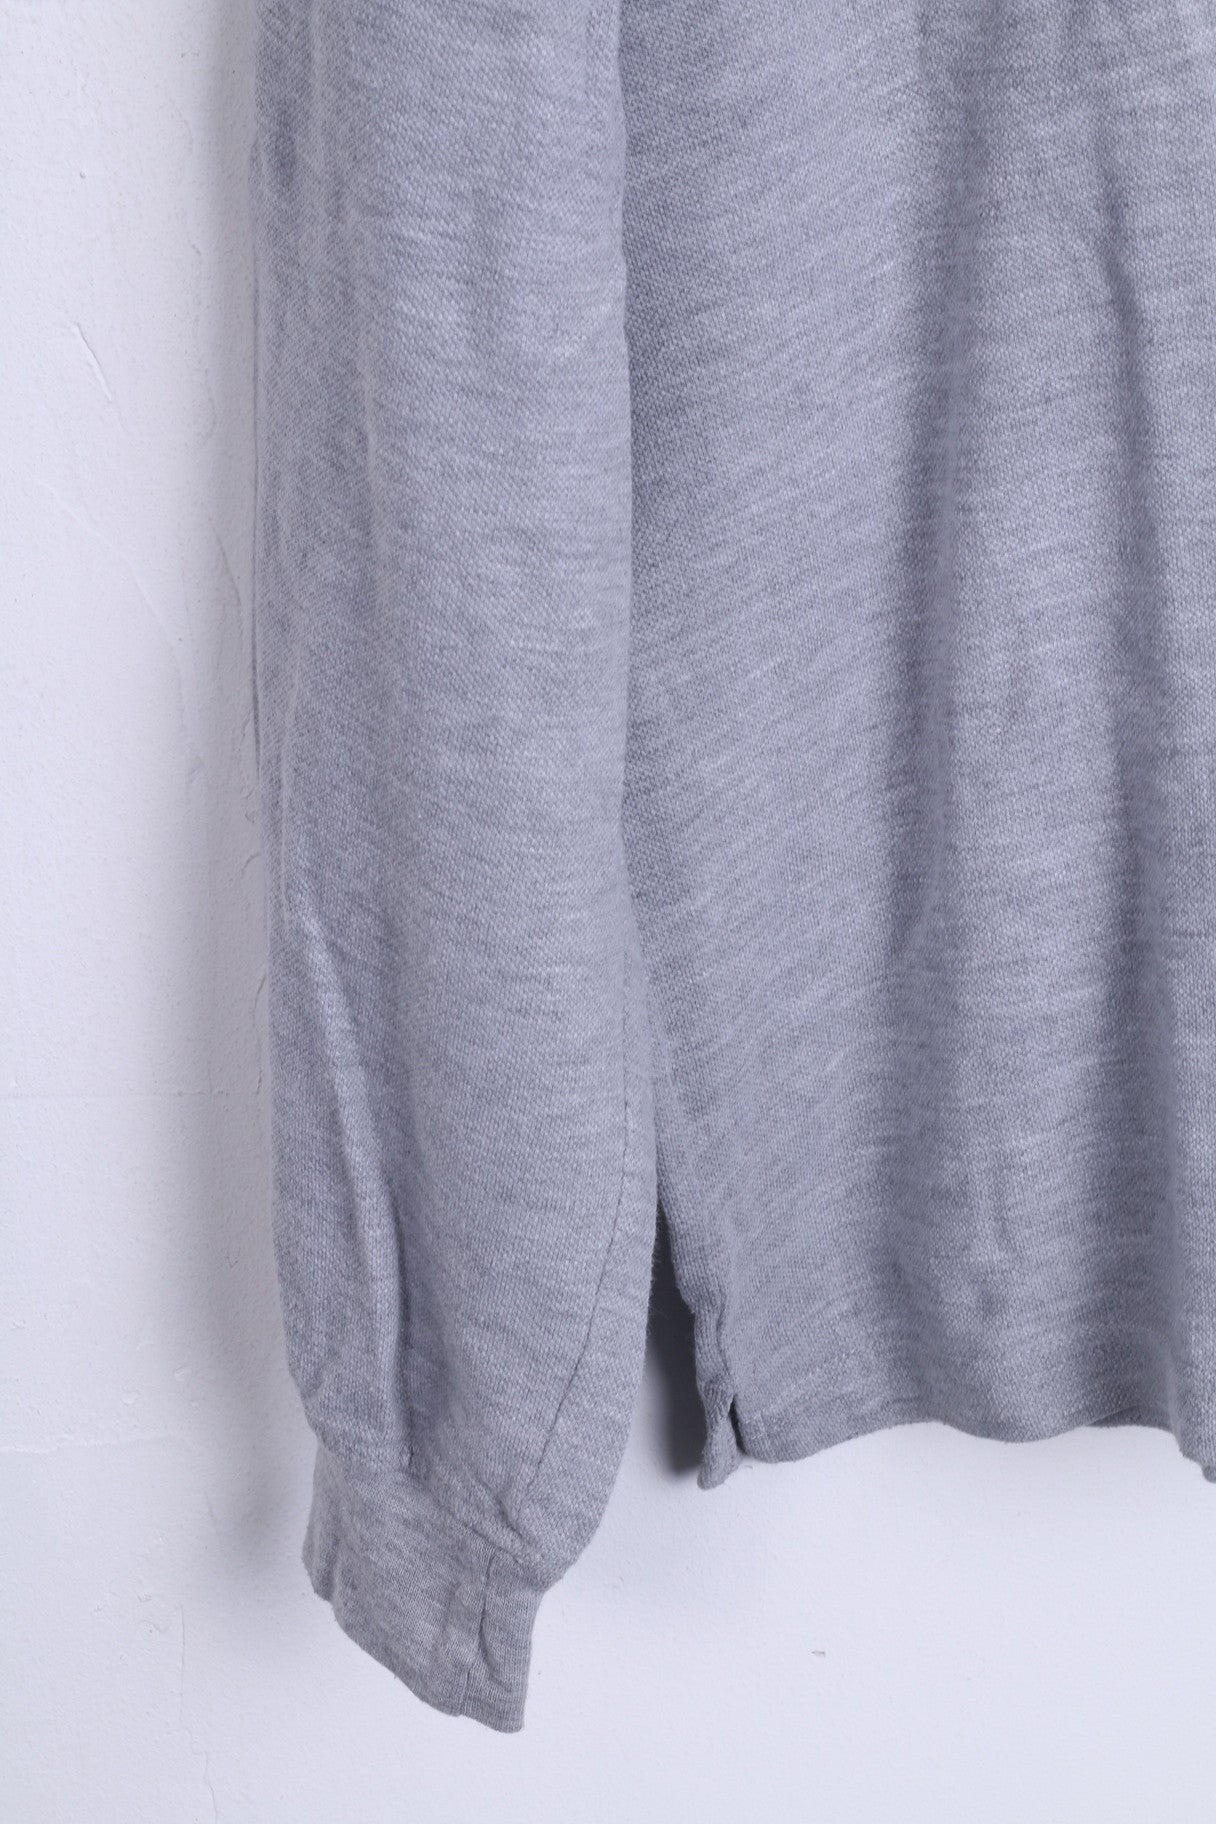 CHIEMSSEE Natural Mens XL Polo Shirt Grey Cotton Long Sleeve - RetrospectClothes